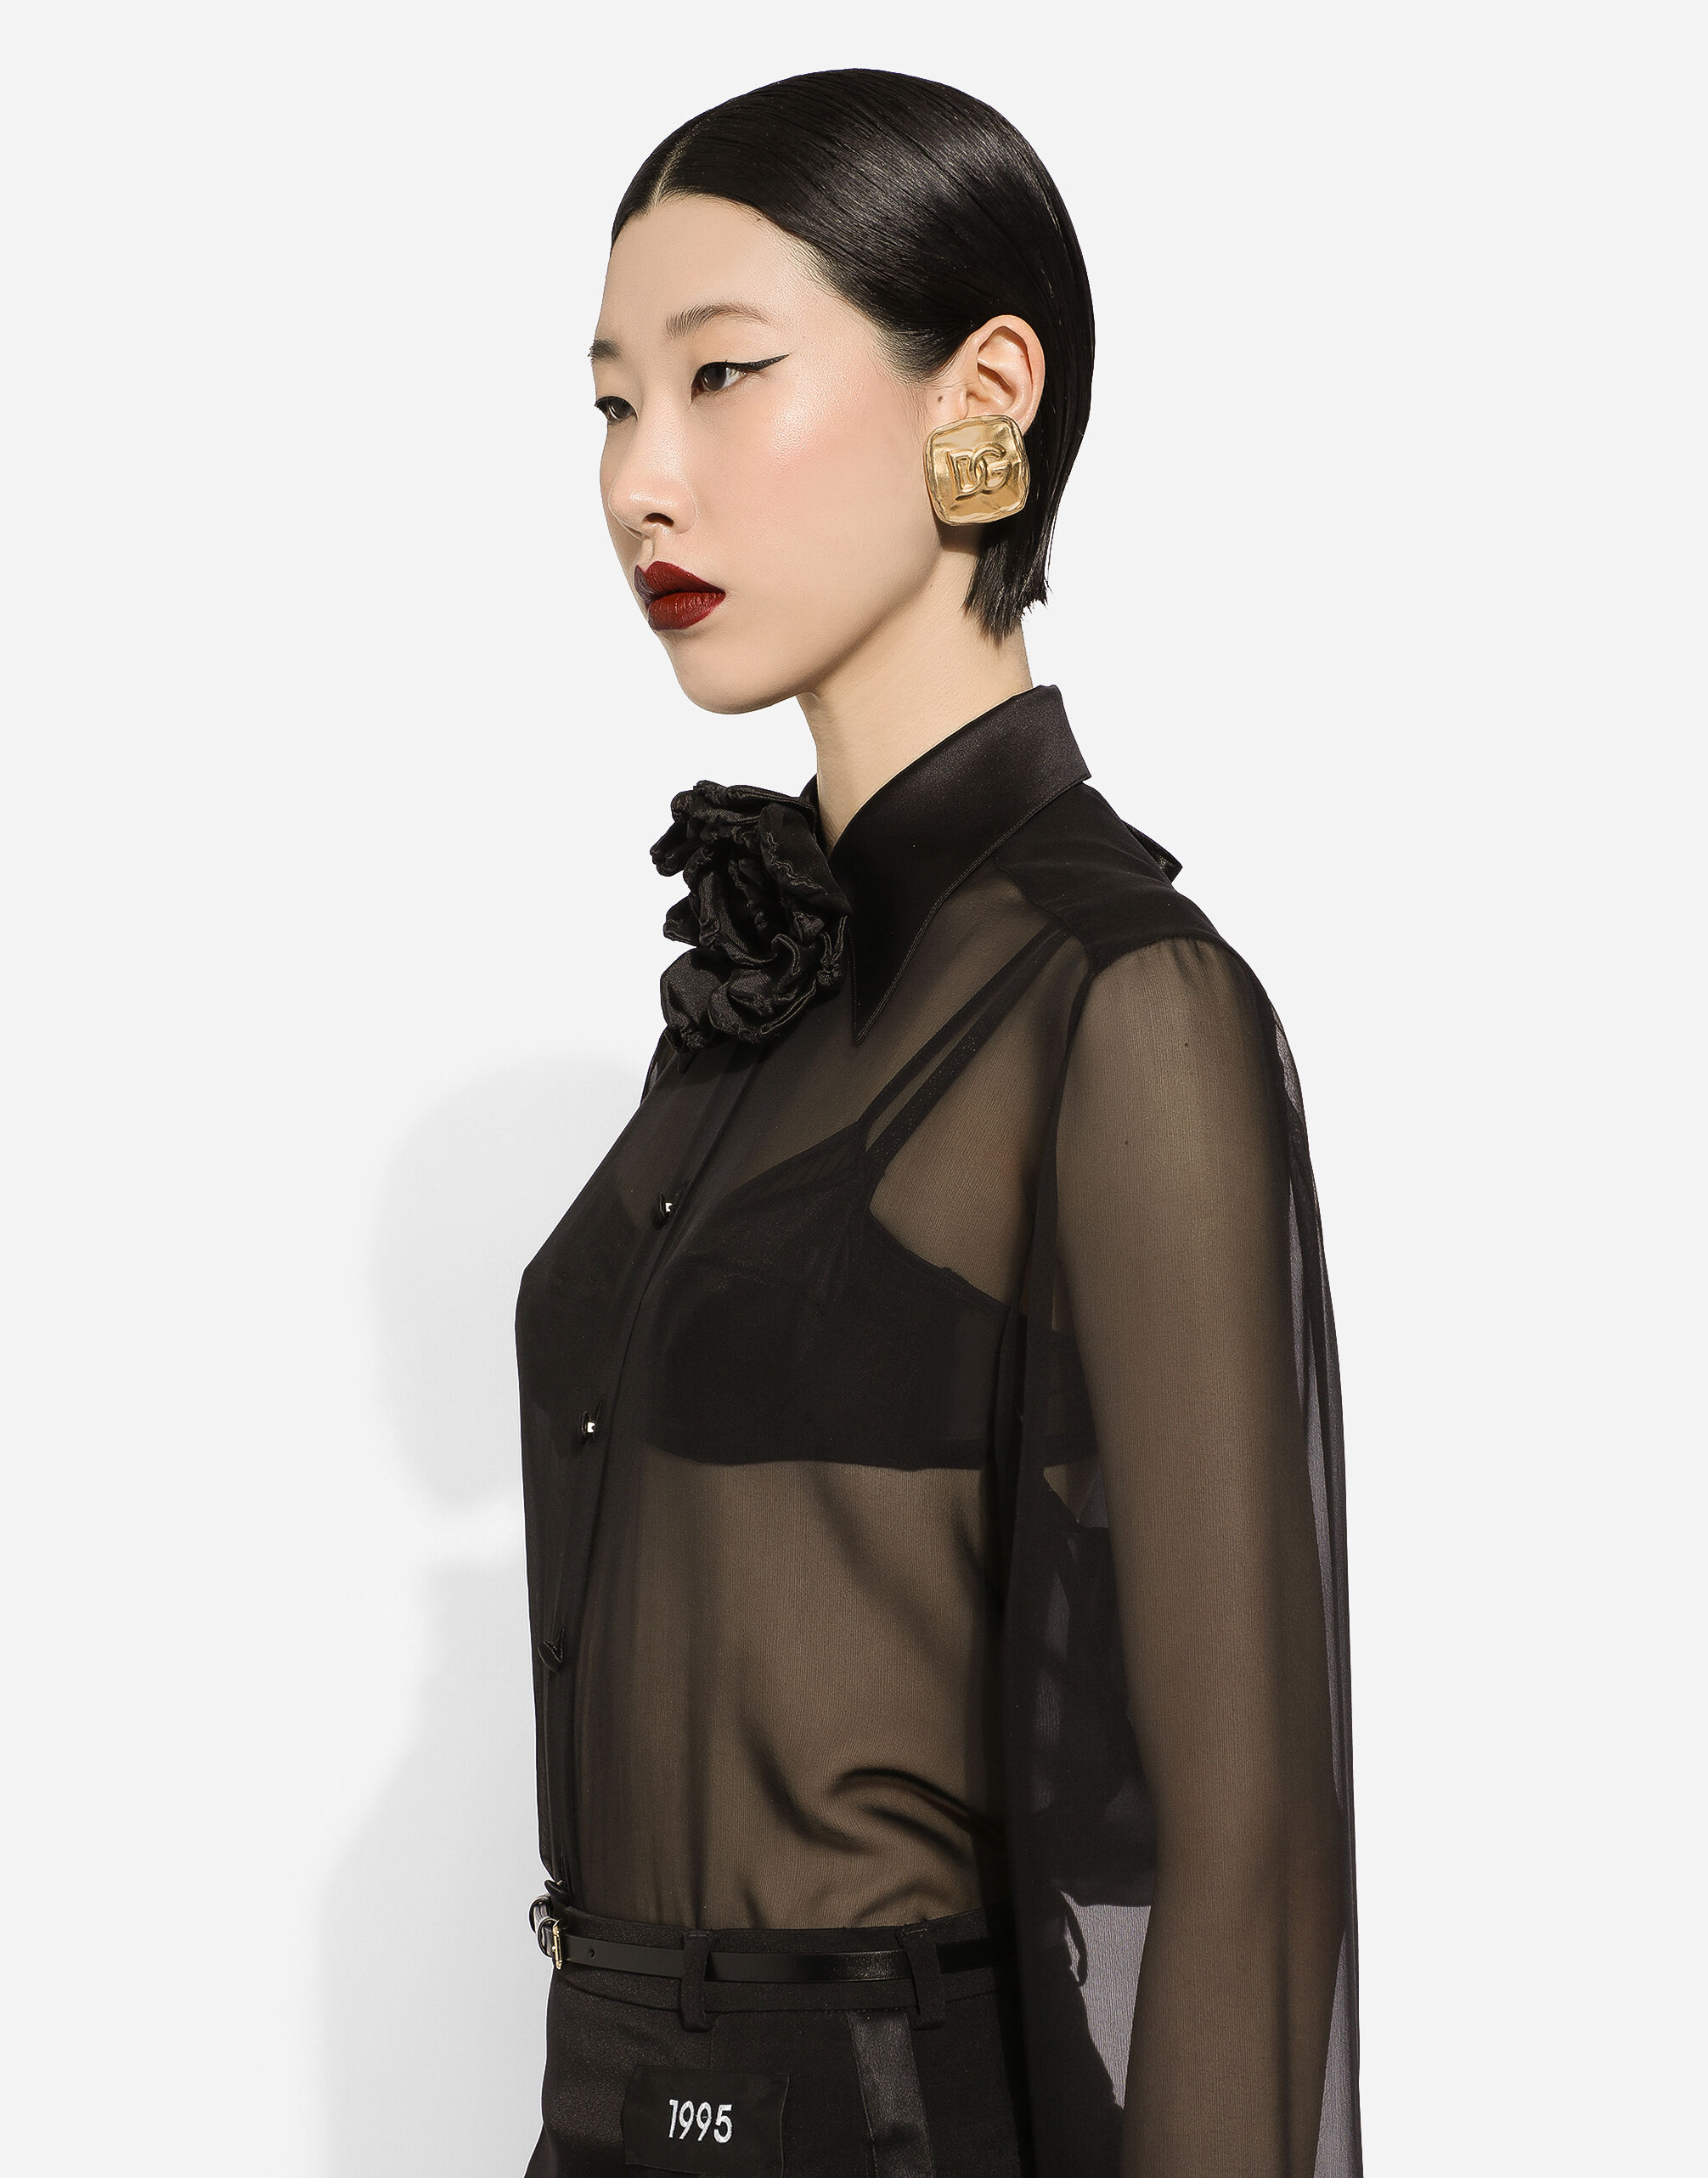 Silk chiffon shirt with satin details in Black for Women 